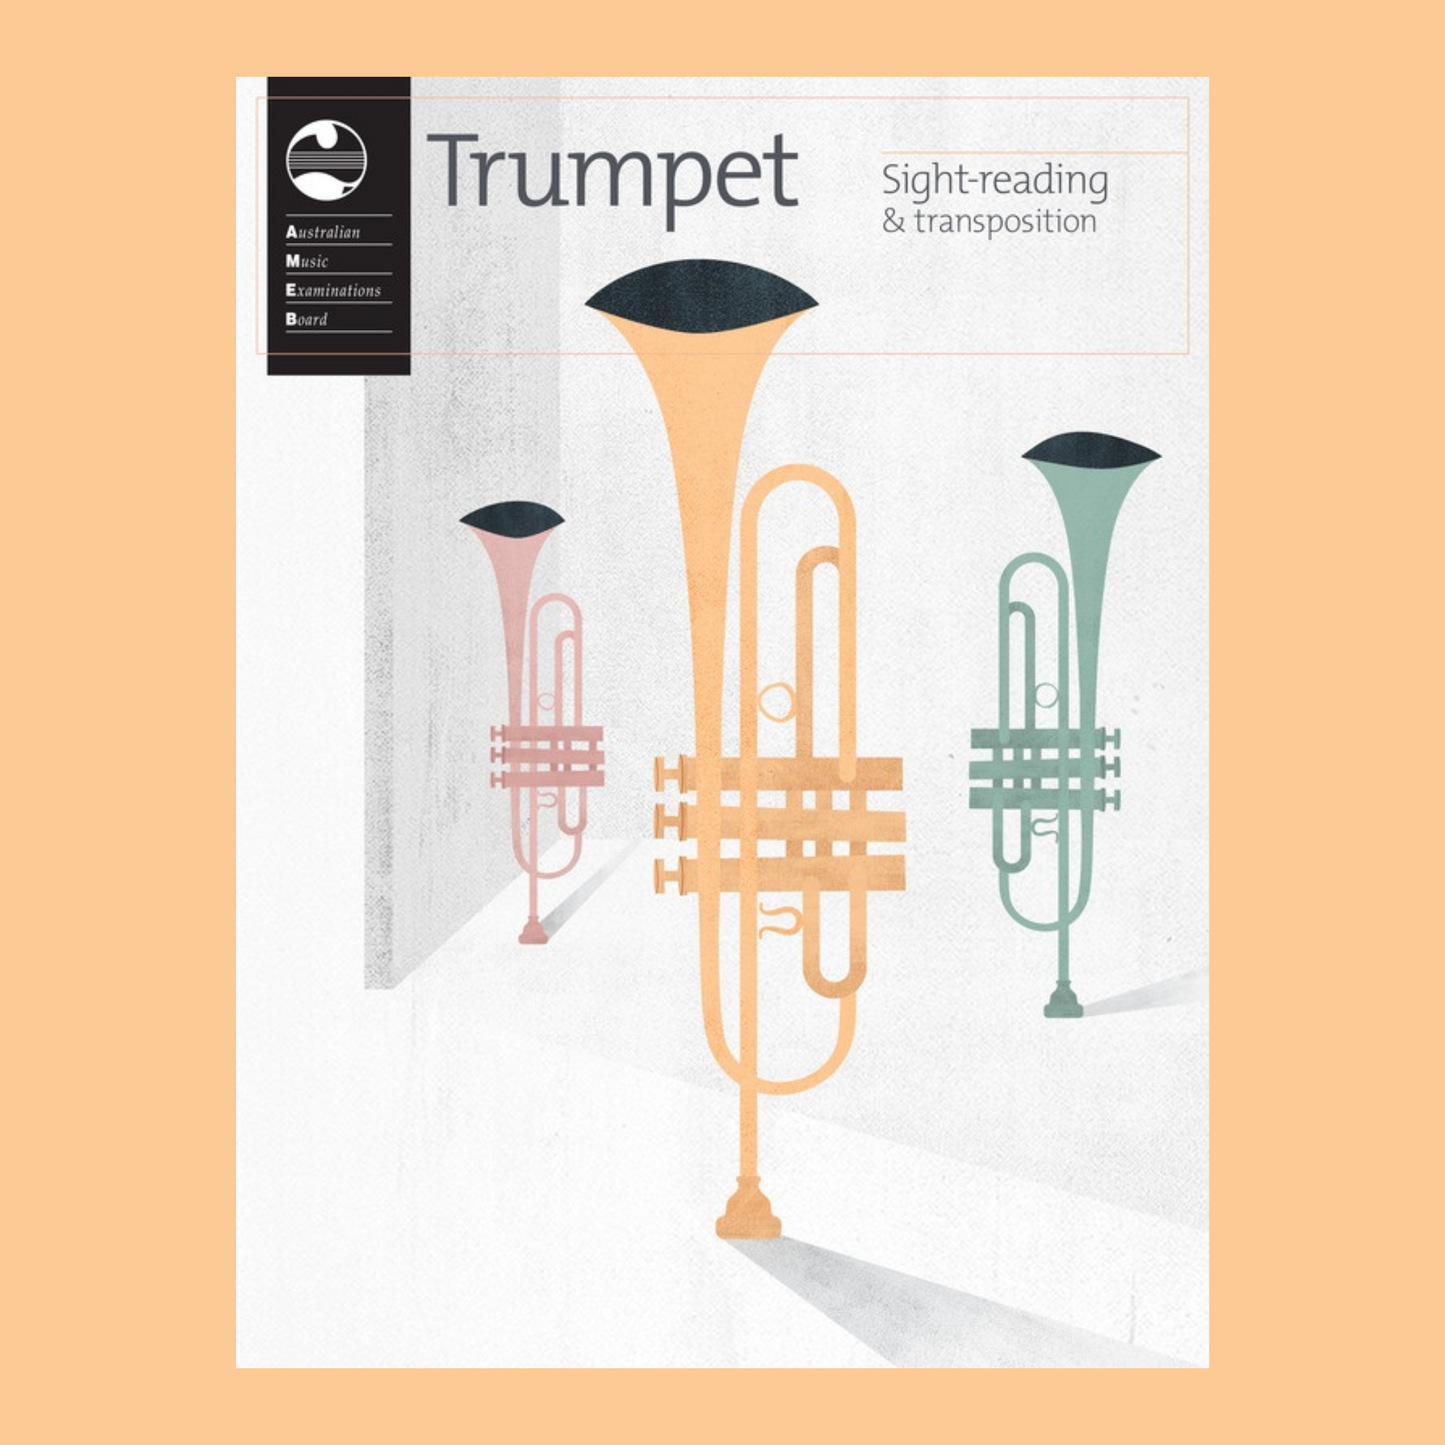 AMEB Trumpet Series 2 - Teacher's Pack C (Preliminary - Grade 3) + Technical & Sight Reading- 6 Books